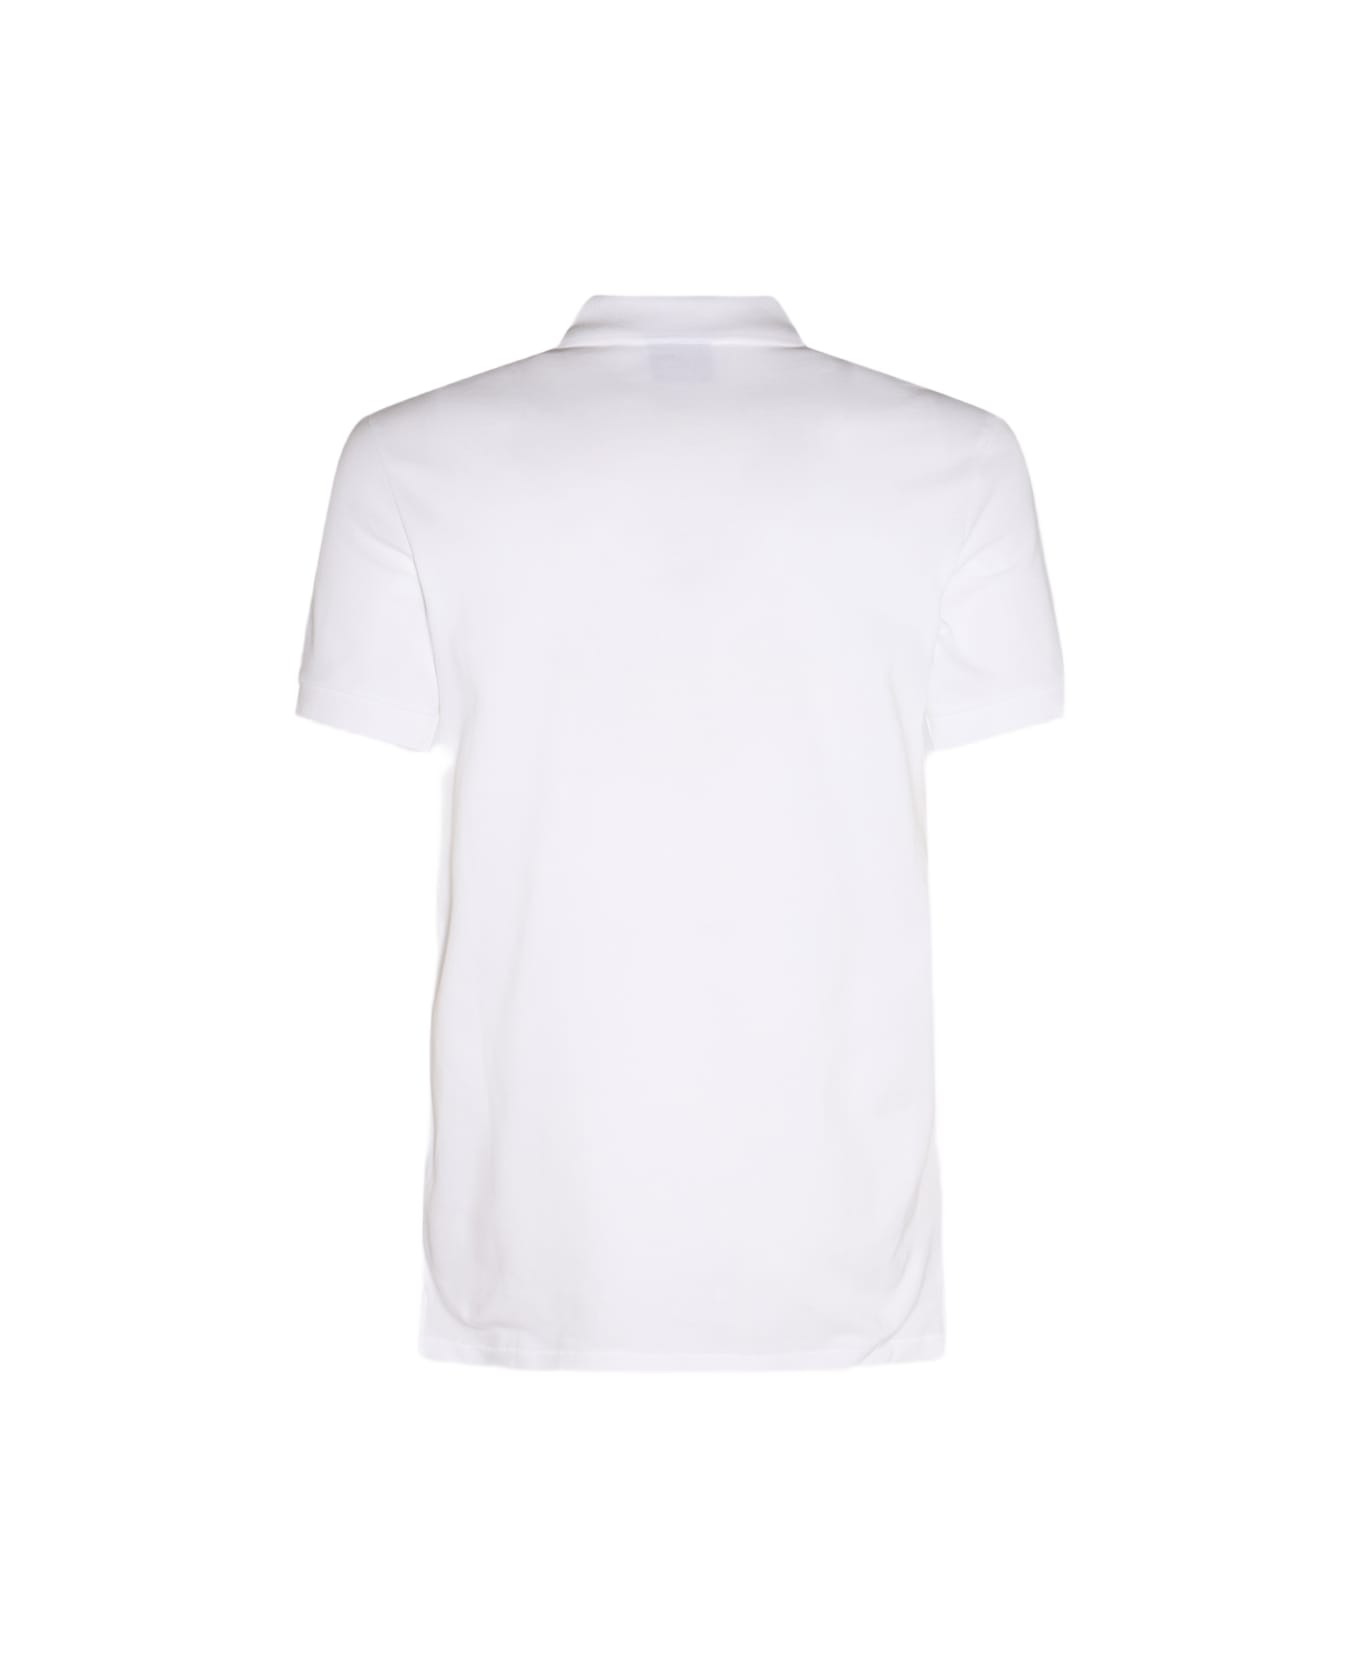 Paul Smith White Cotton Polo Shirt ポロシャツ